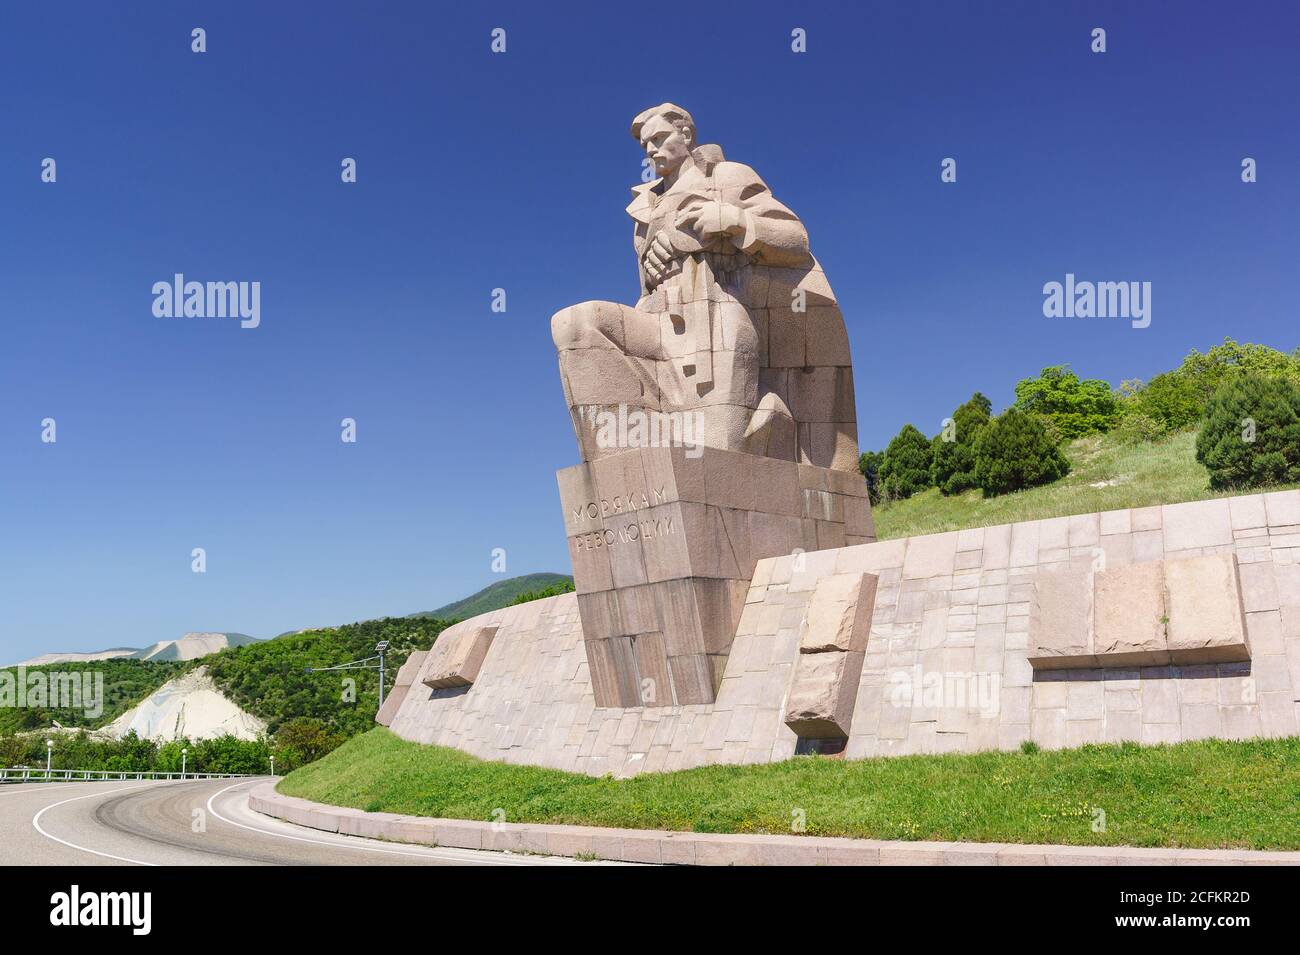 Novorossiysk, Krasnodar Krai, Russia - April 29.2017: Monument 'to the Sailors of the revolution' at the turn of the route Novorossiysk-Tuapse Stock Photo